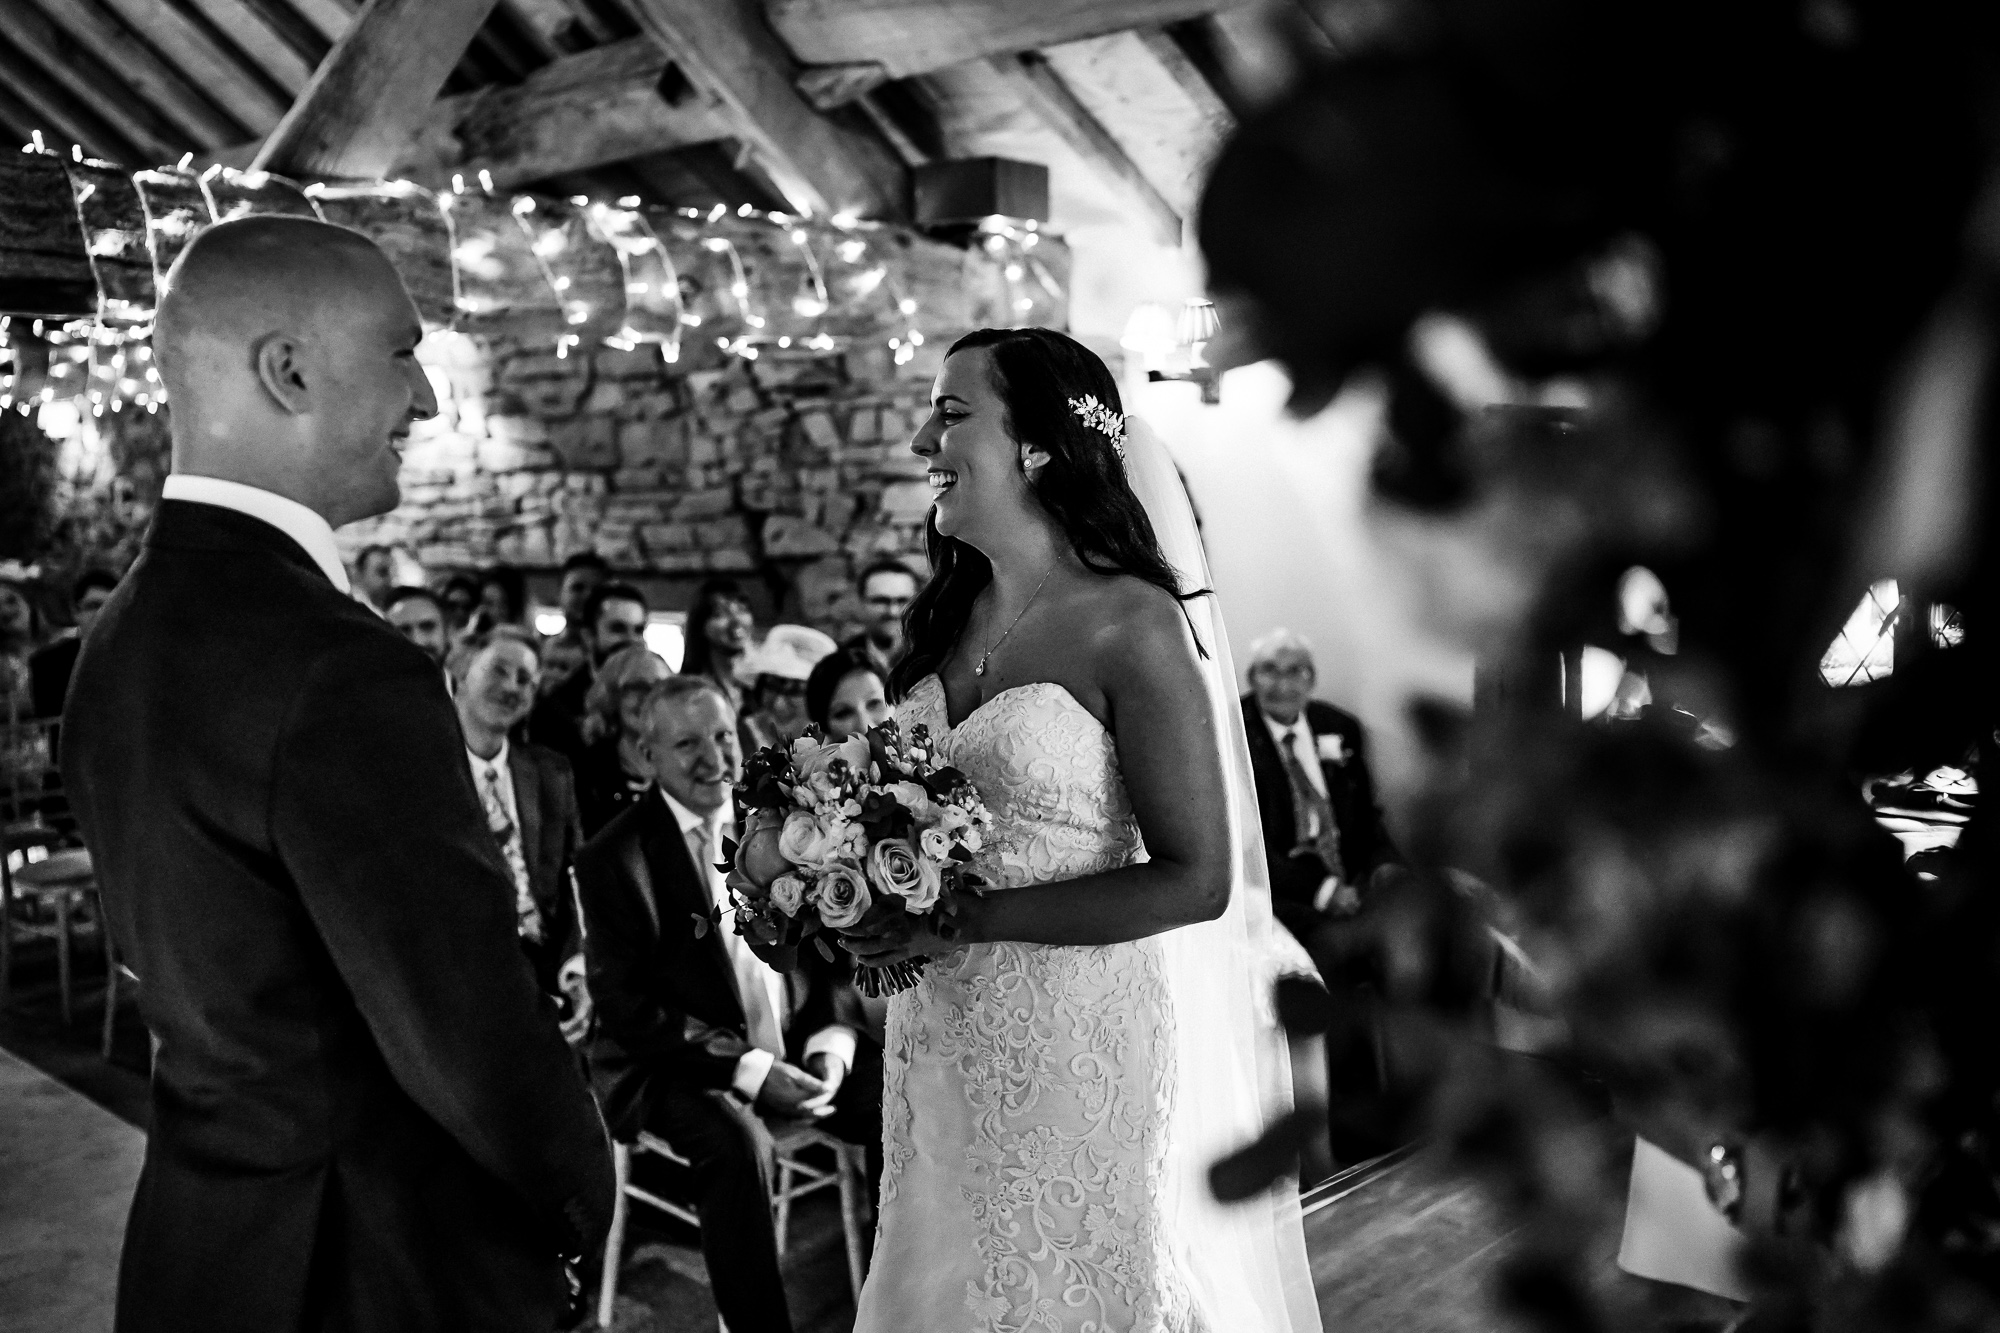 Hyde Bank Farm Wedding Photography Manchester wedding photographer (23 of 49).jpg